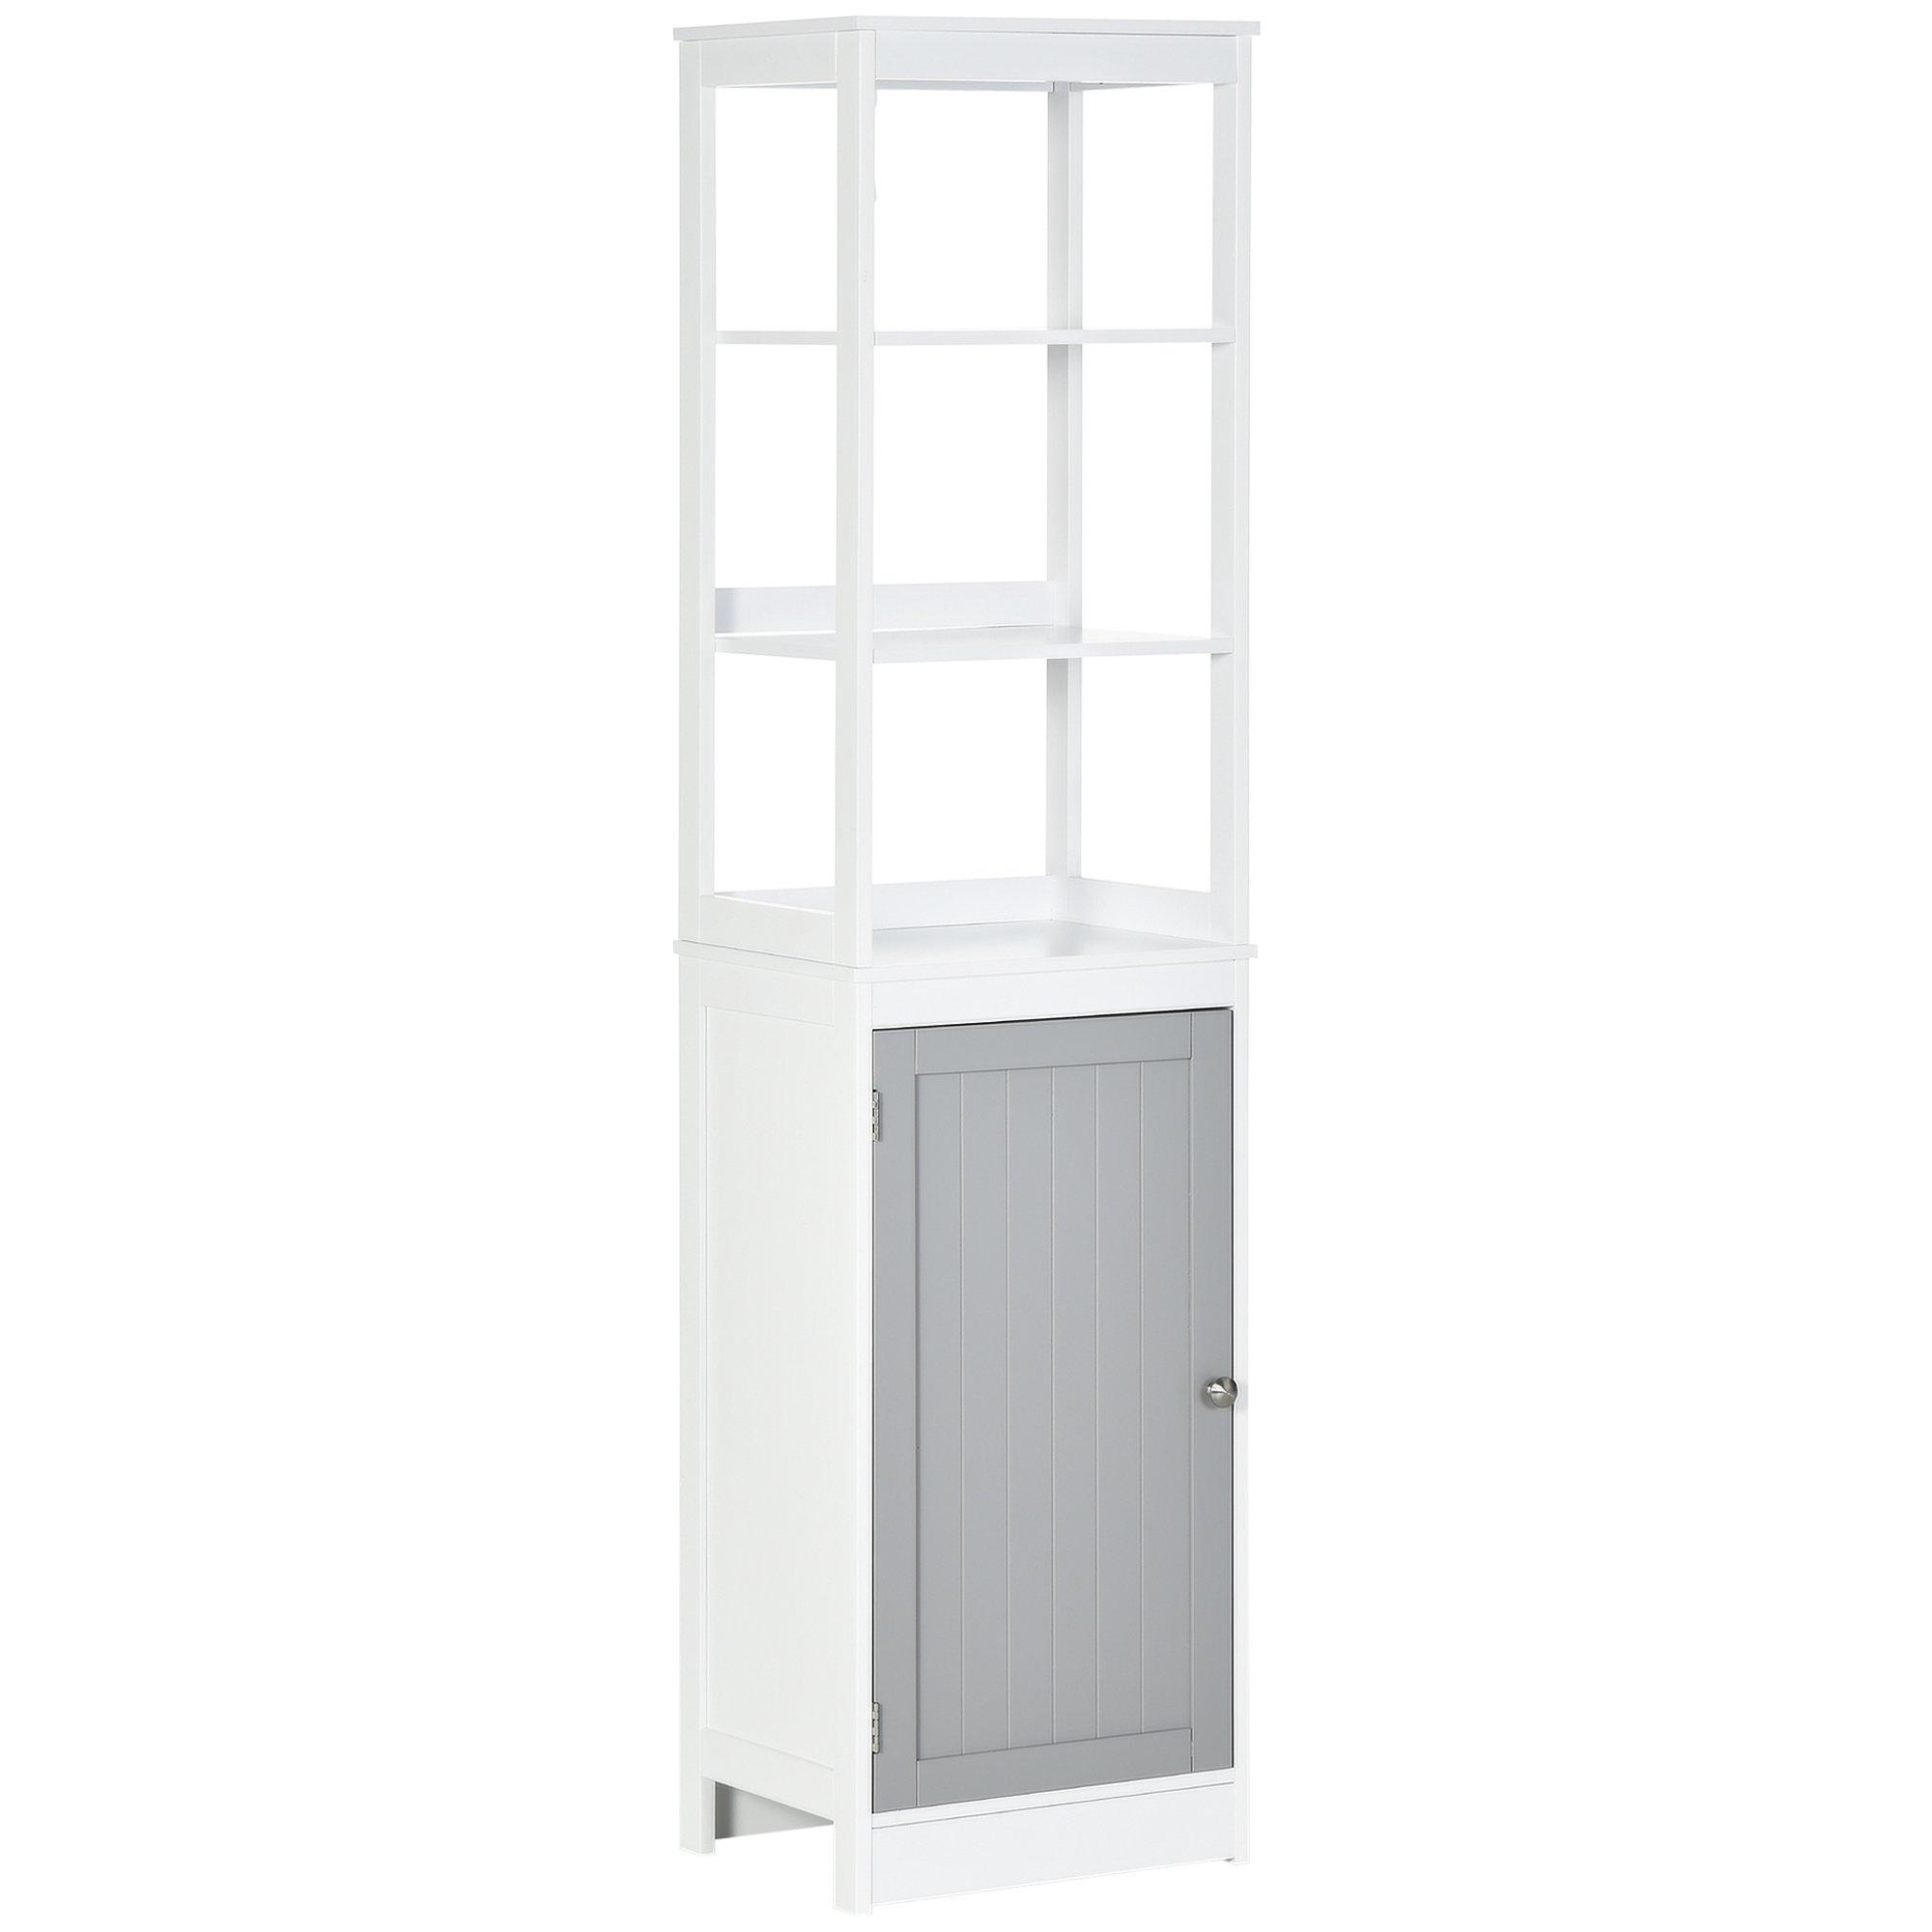 Bathroom Storage Cabinet Thin Storage Organizer with Door and Shelves